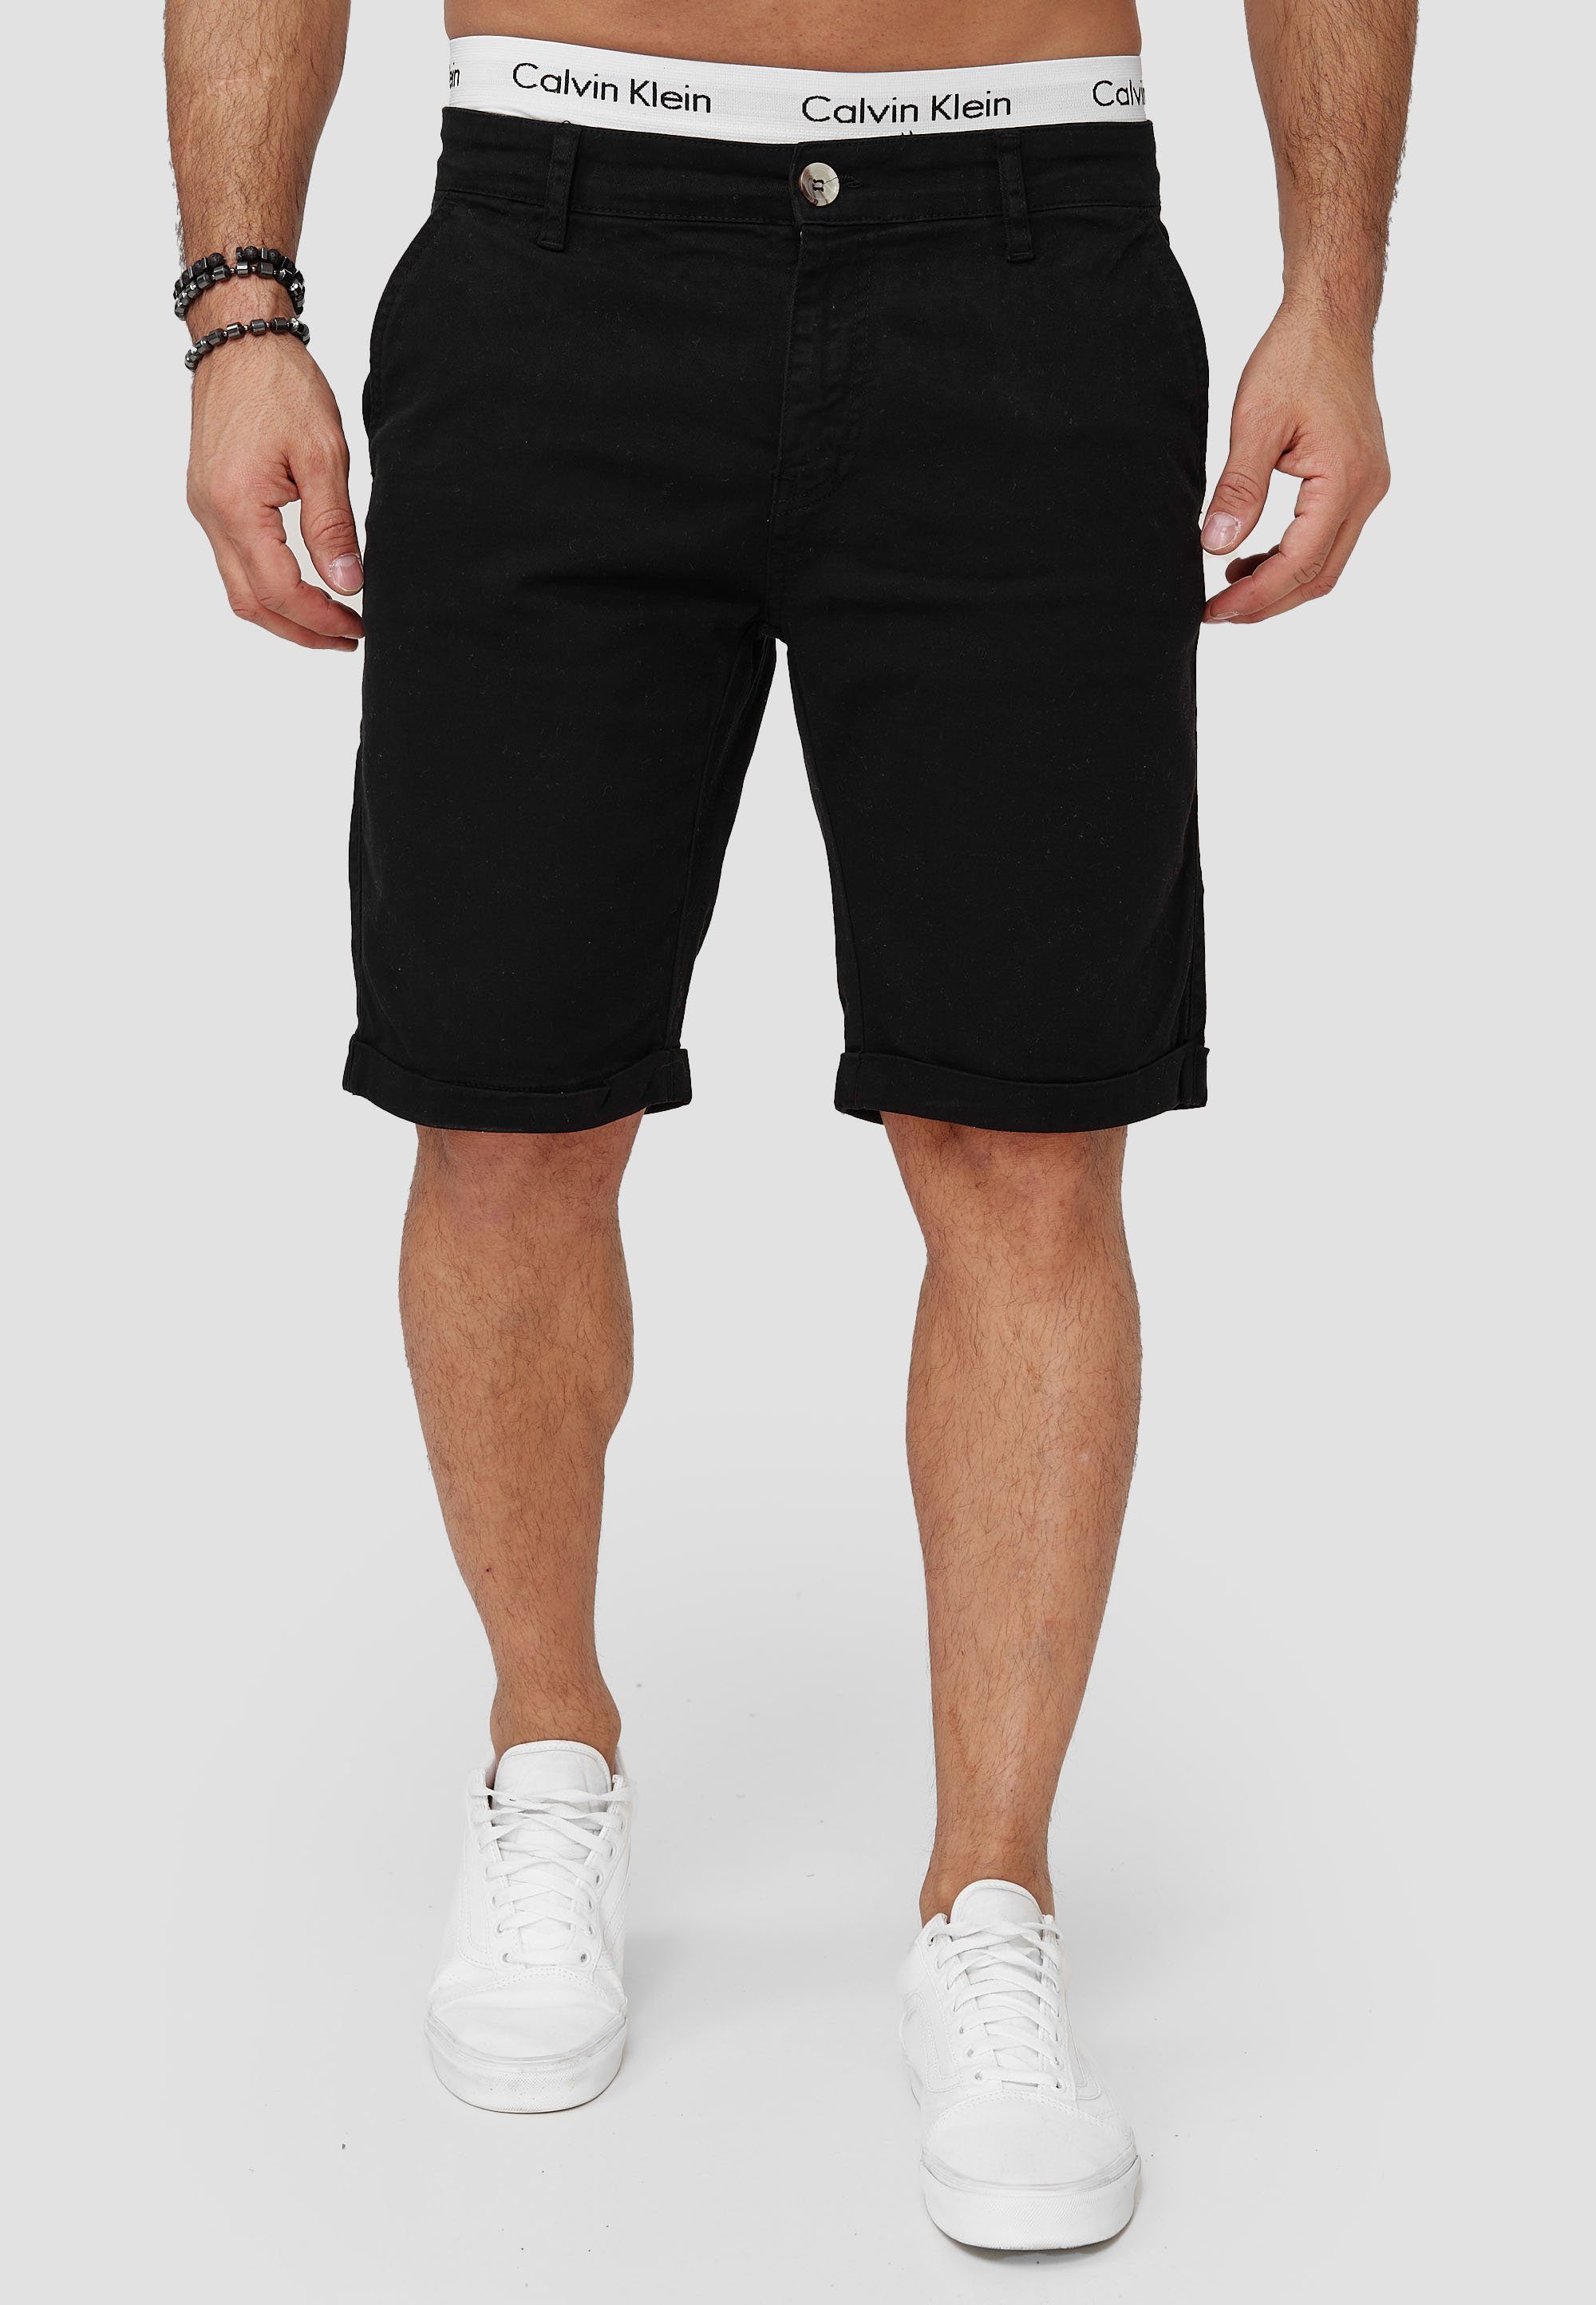 im Bermudas (Kurze Casual Hose Sweatpants, Fitness 1-tlg., Schwarz Design) Shorts Freizeit modischem OneRedox SH-3364